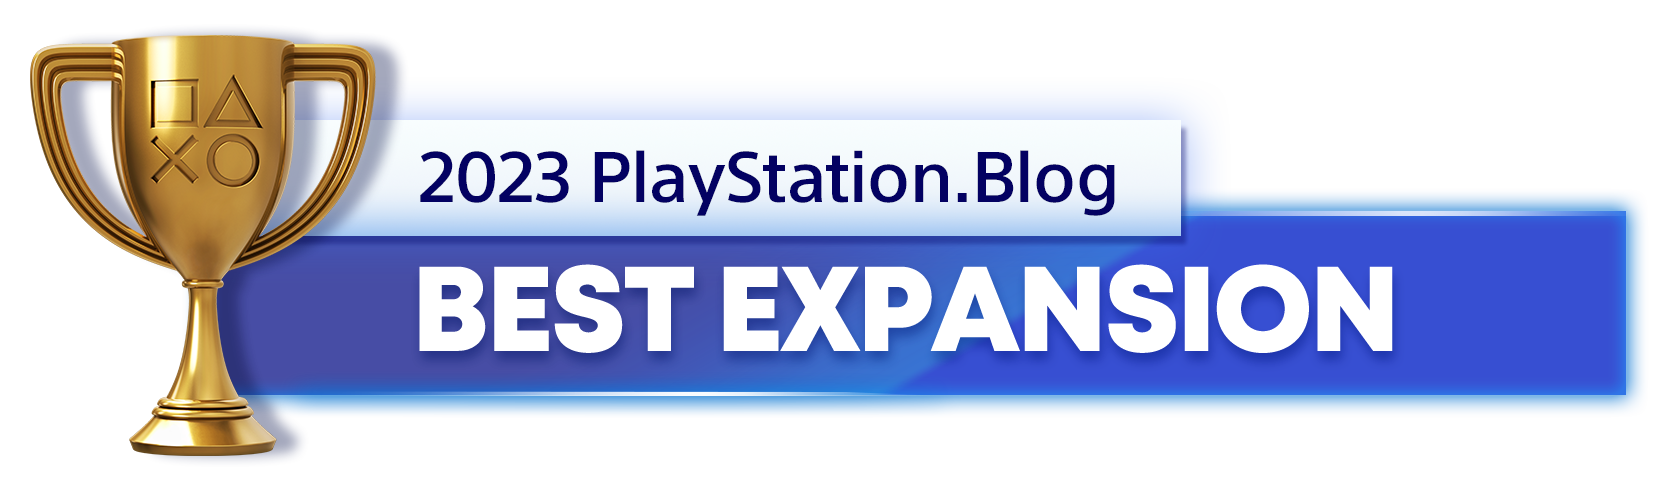  "Gold Trophy for the 2023 PlayStation Blog Best Expansion Winner"